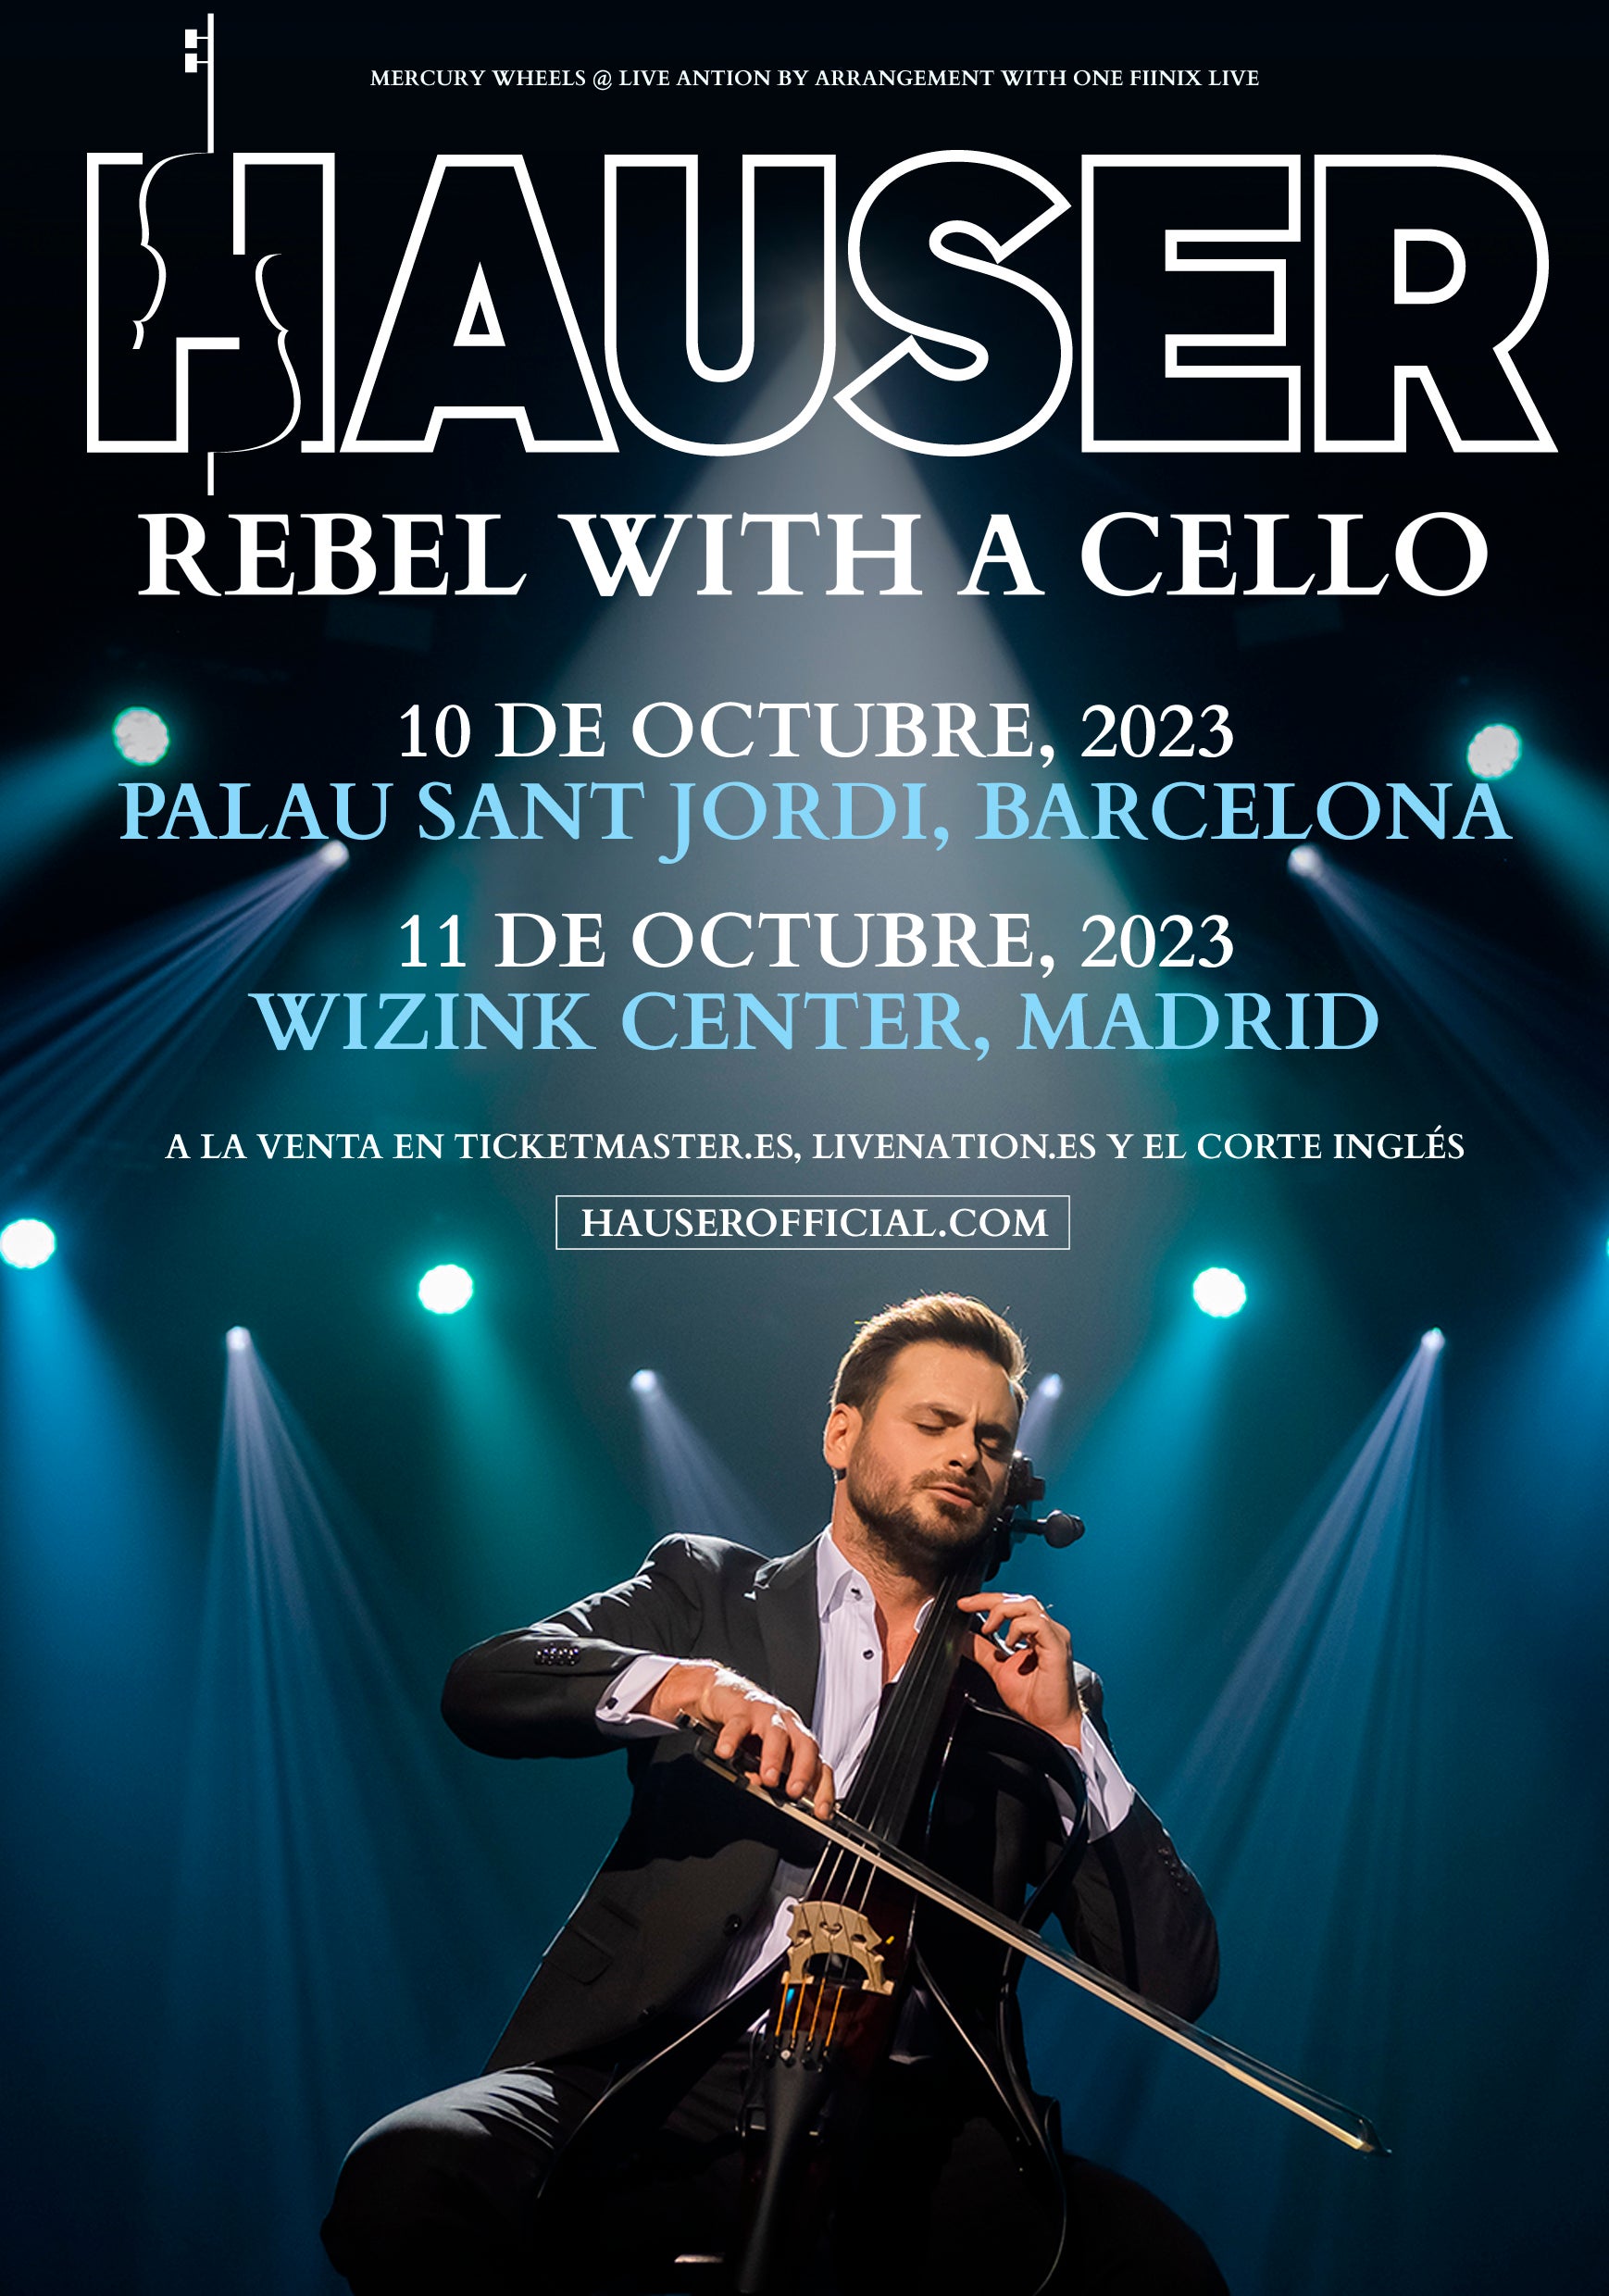 HAUSER - Rebel with a Cello en Madrid